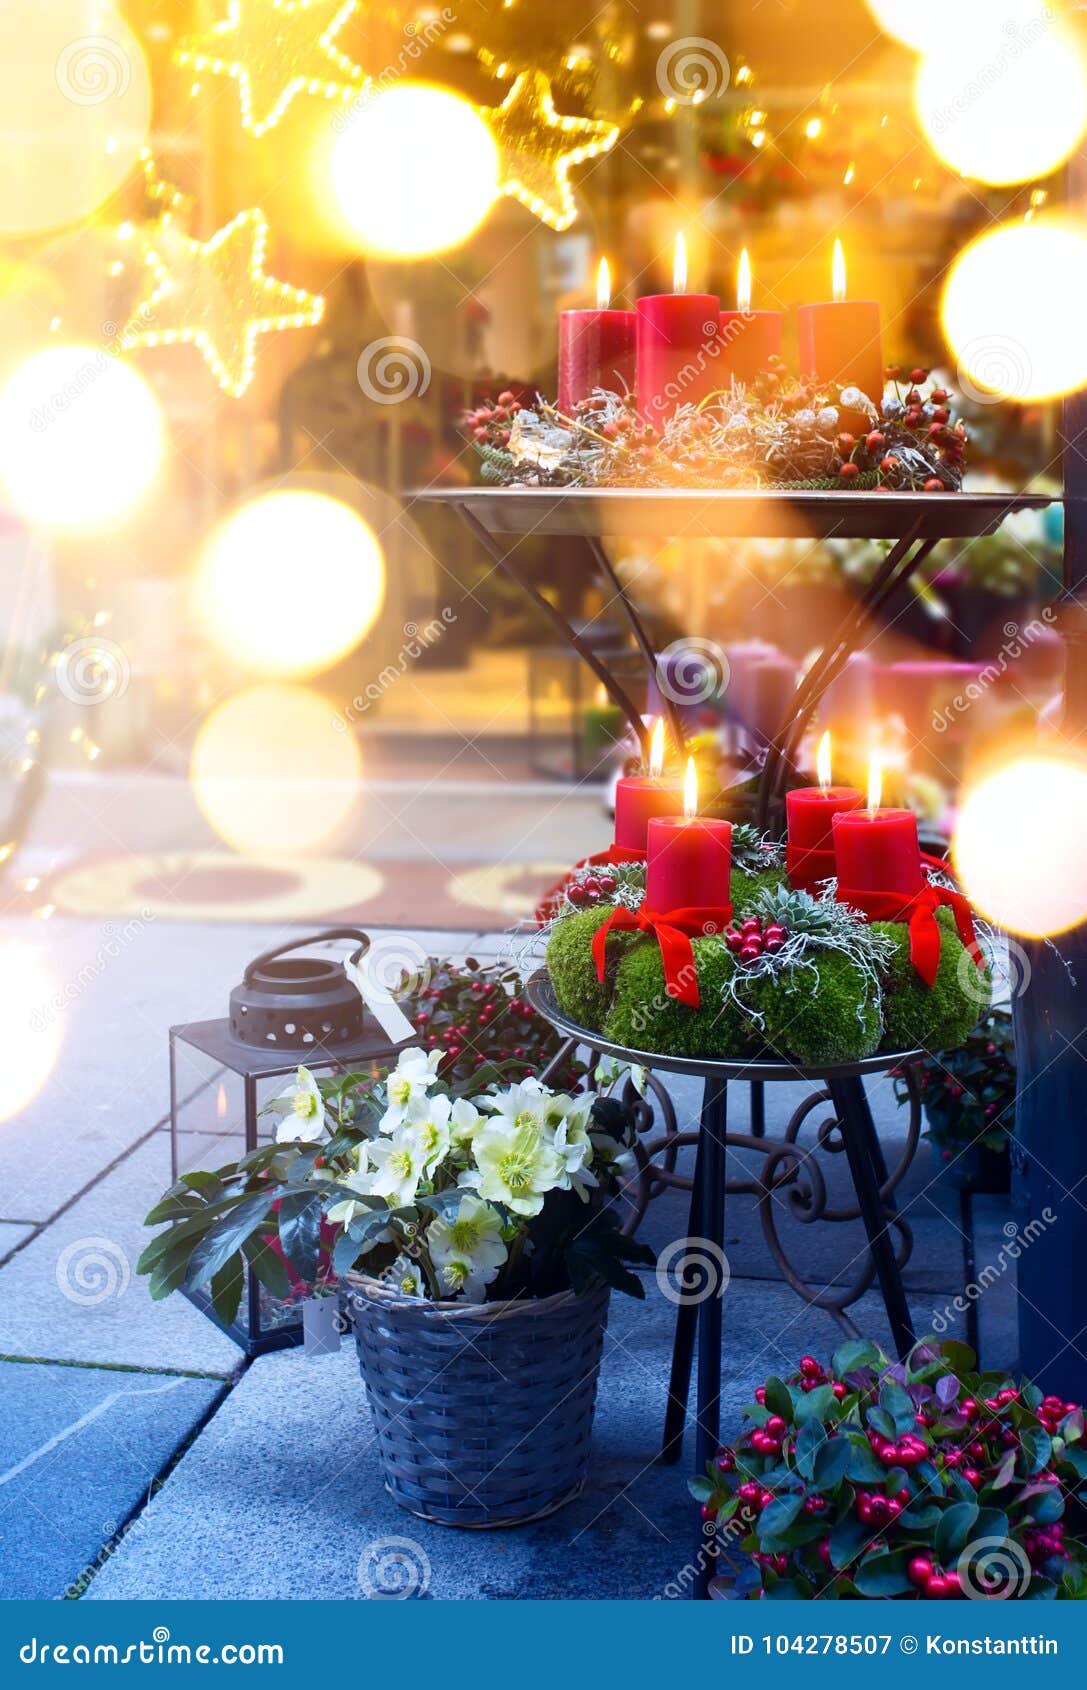 Art Christmas Crafts Fair; European Christmas Market Scene; Stock Image - Image of light, market ...